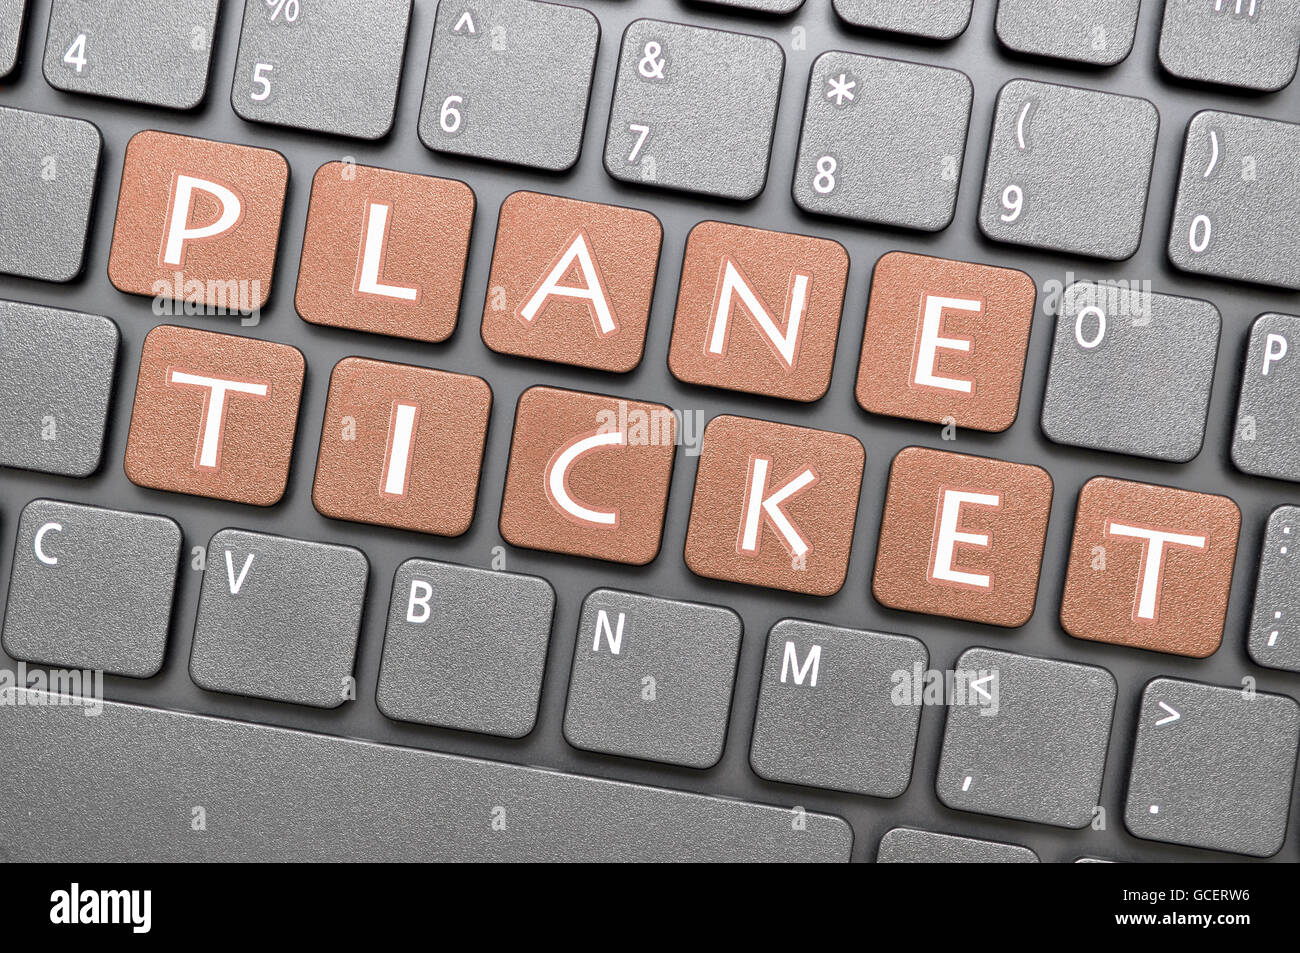 Gunmetal plane ticket key on keyboard Stock Photo